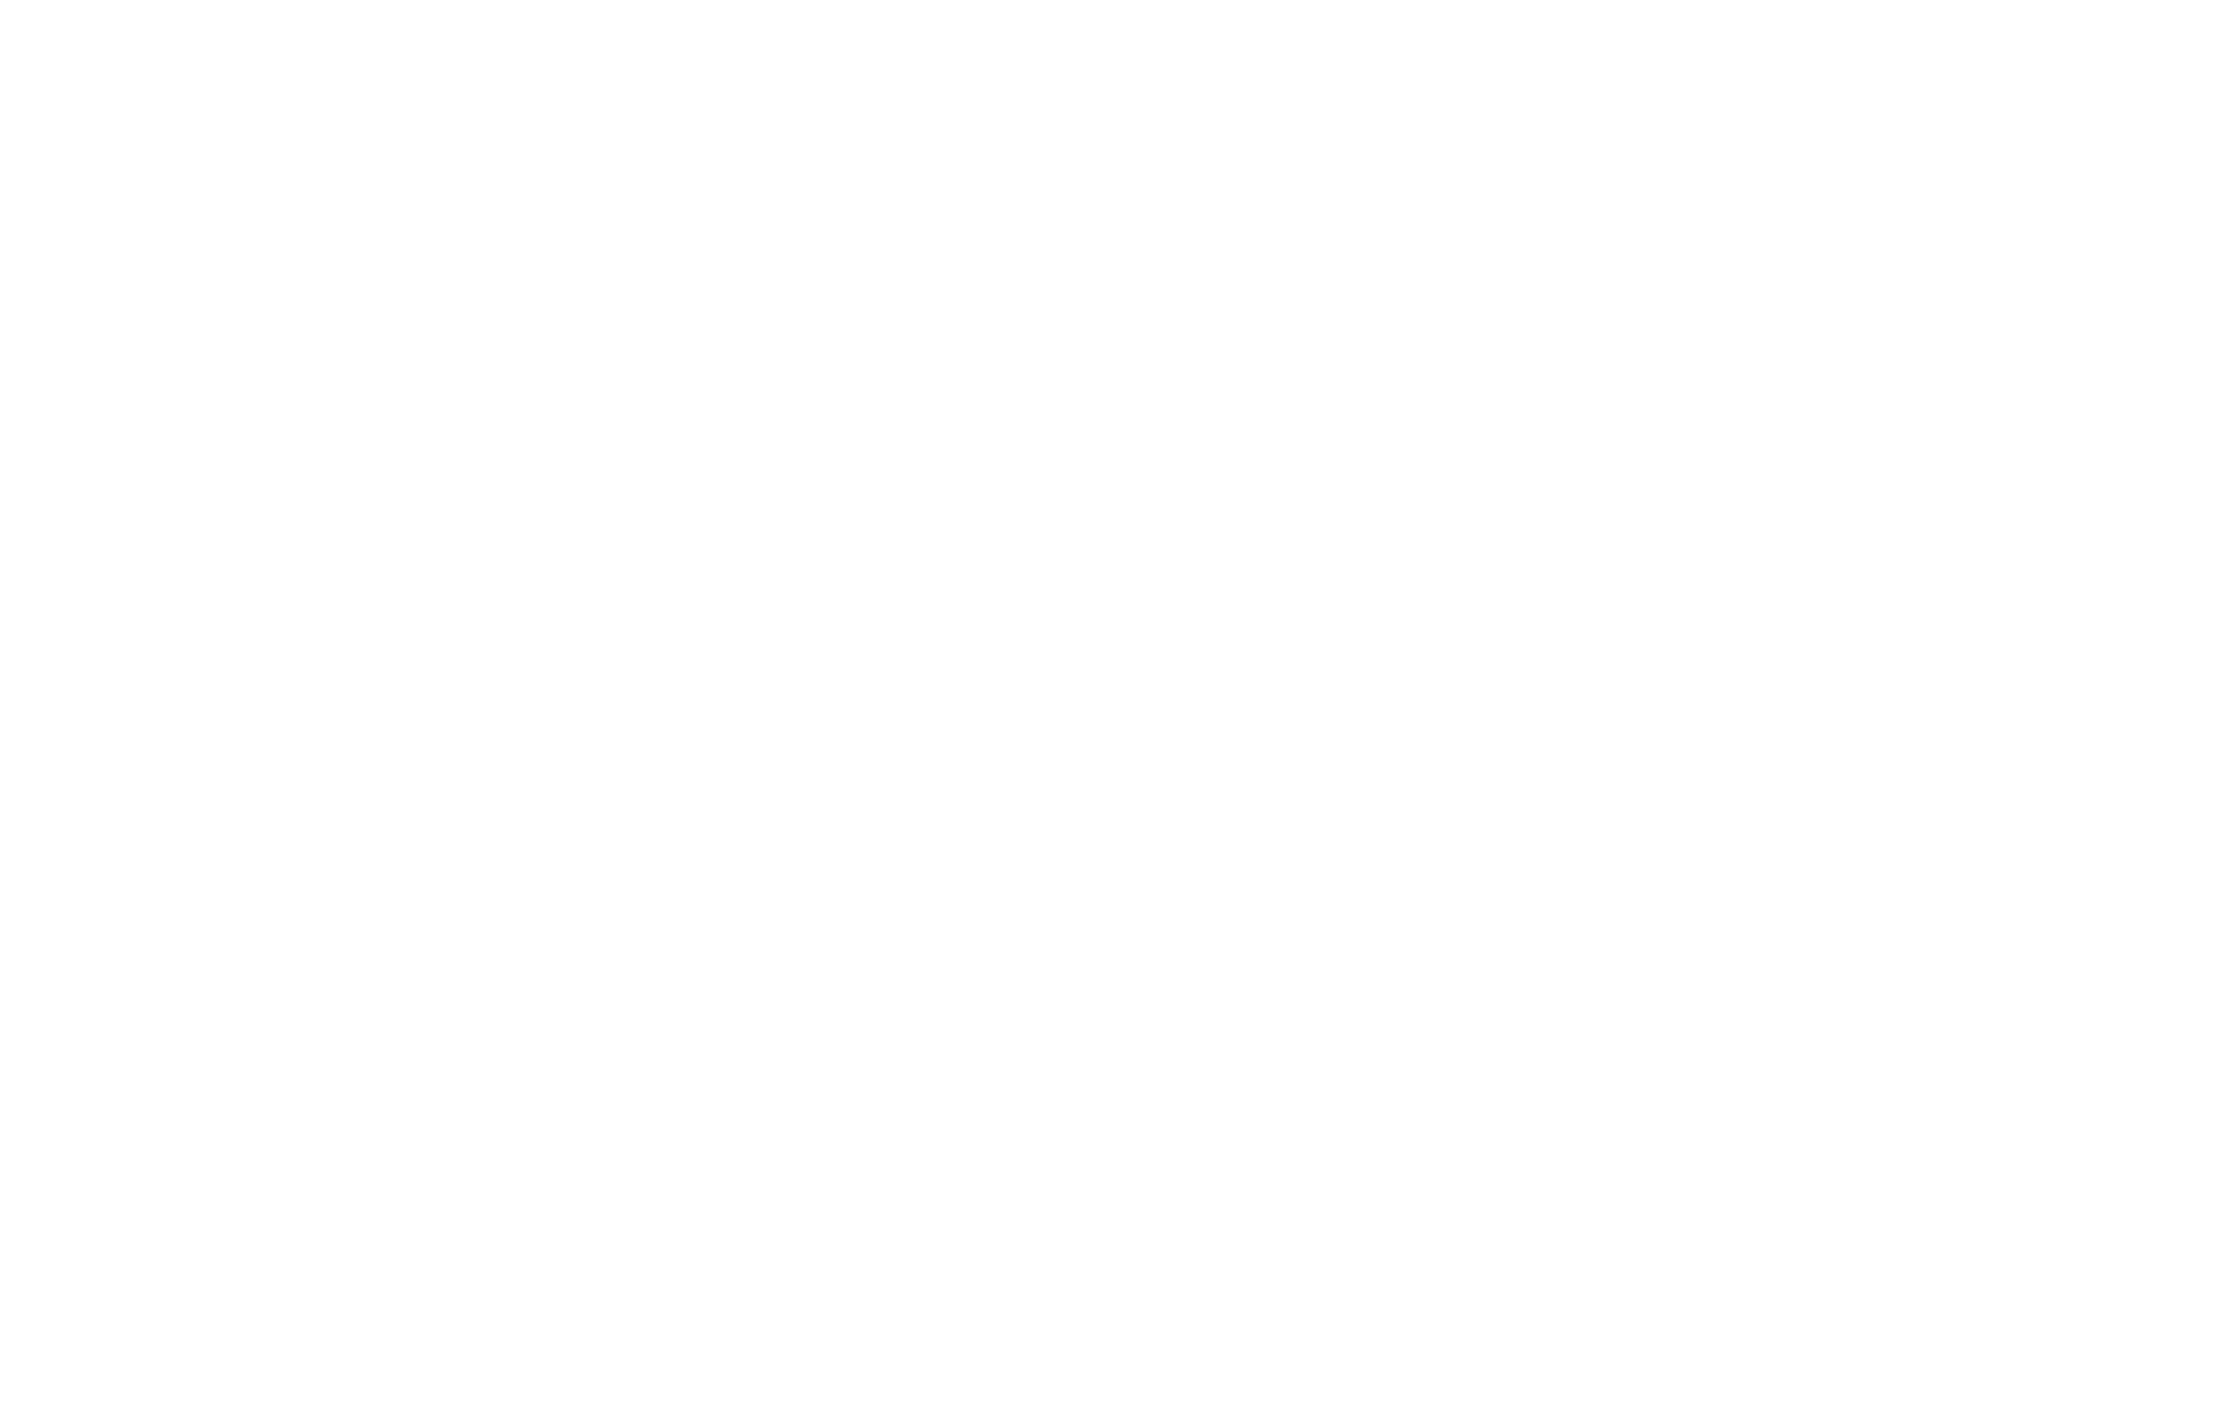 KMB white box logo